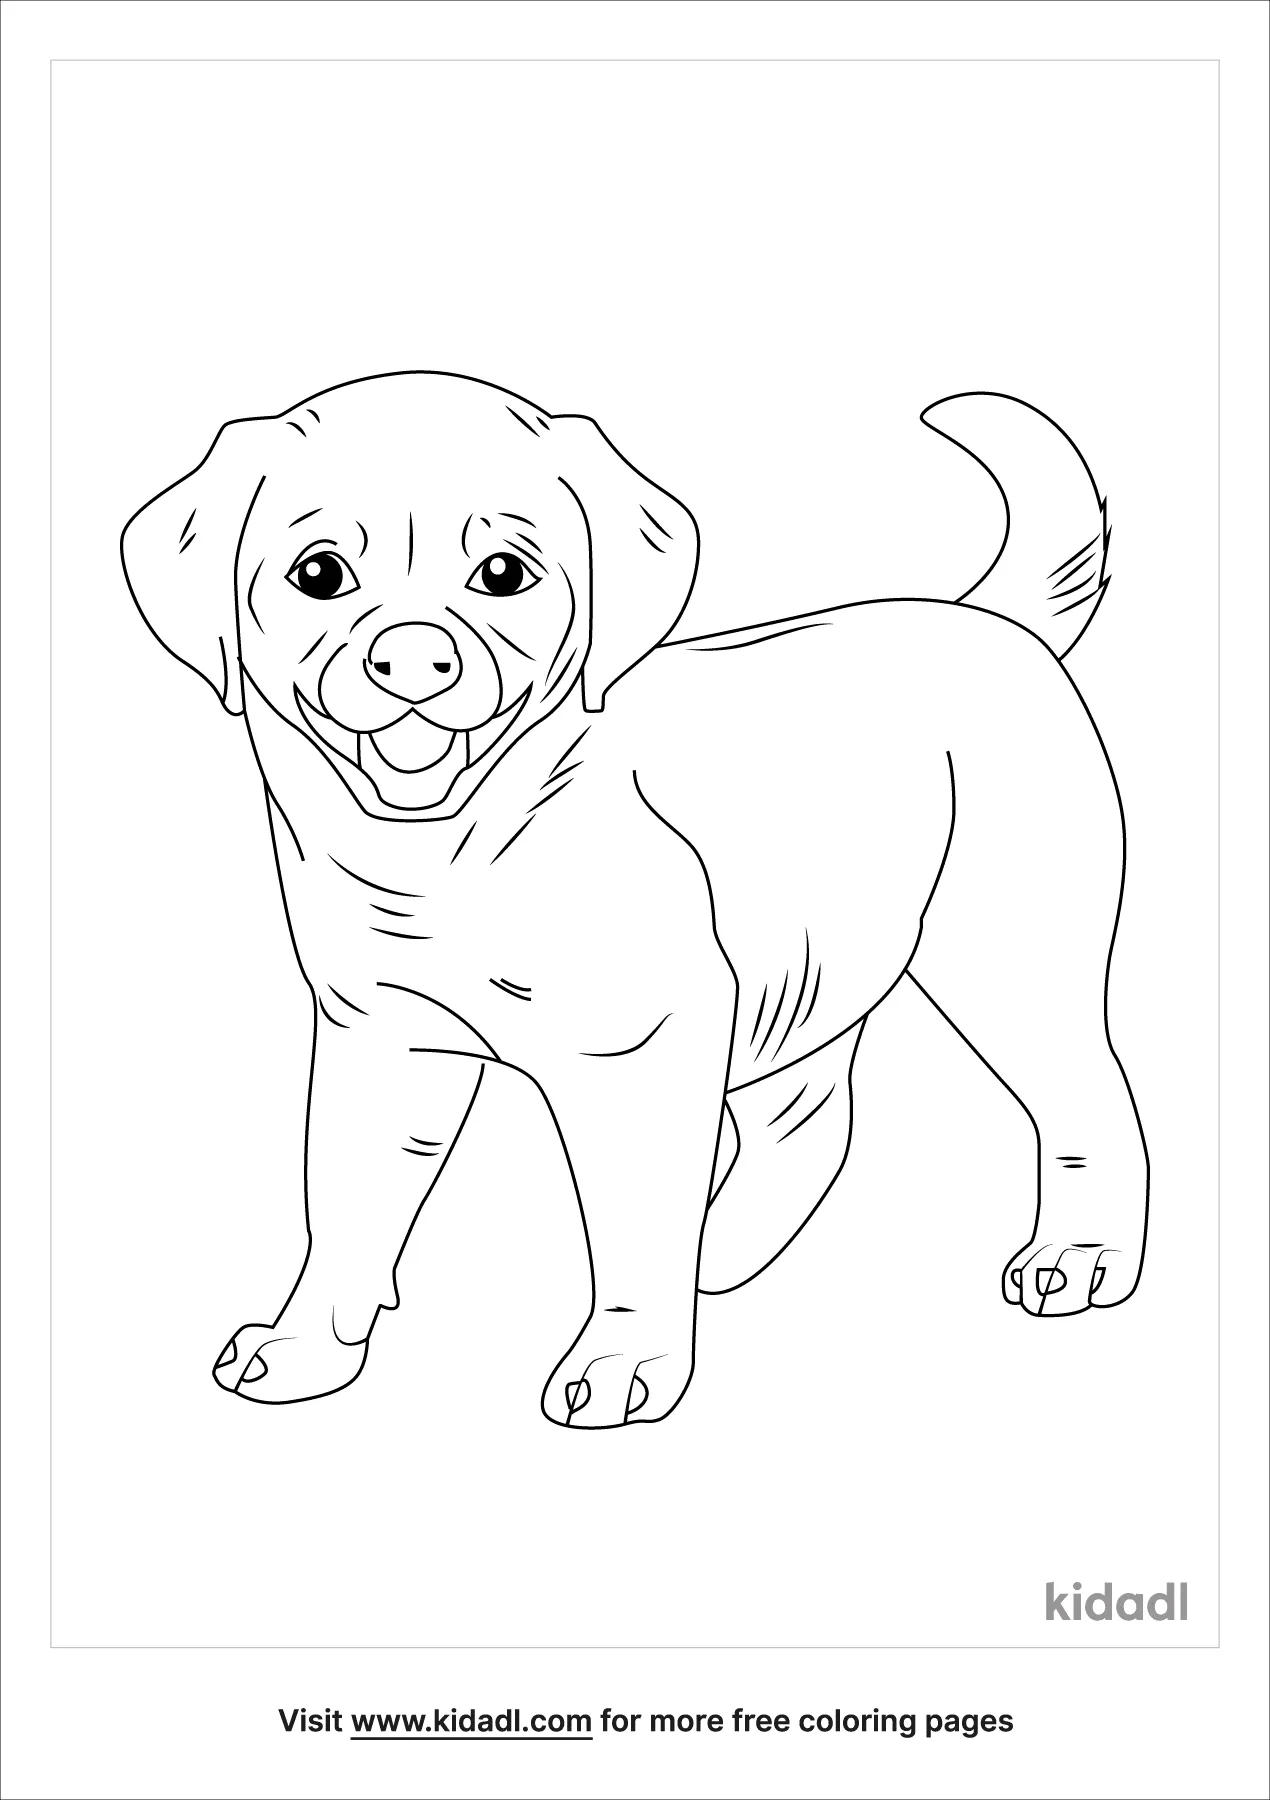 Akita Inu Coloring Page   Free Dogs Coloring Page   Kidadl